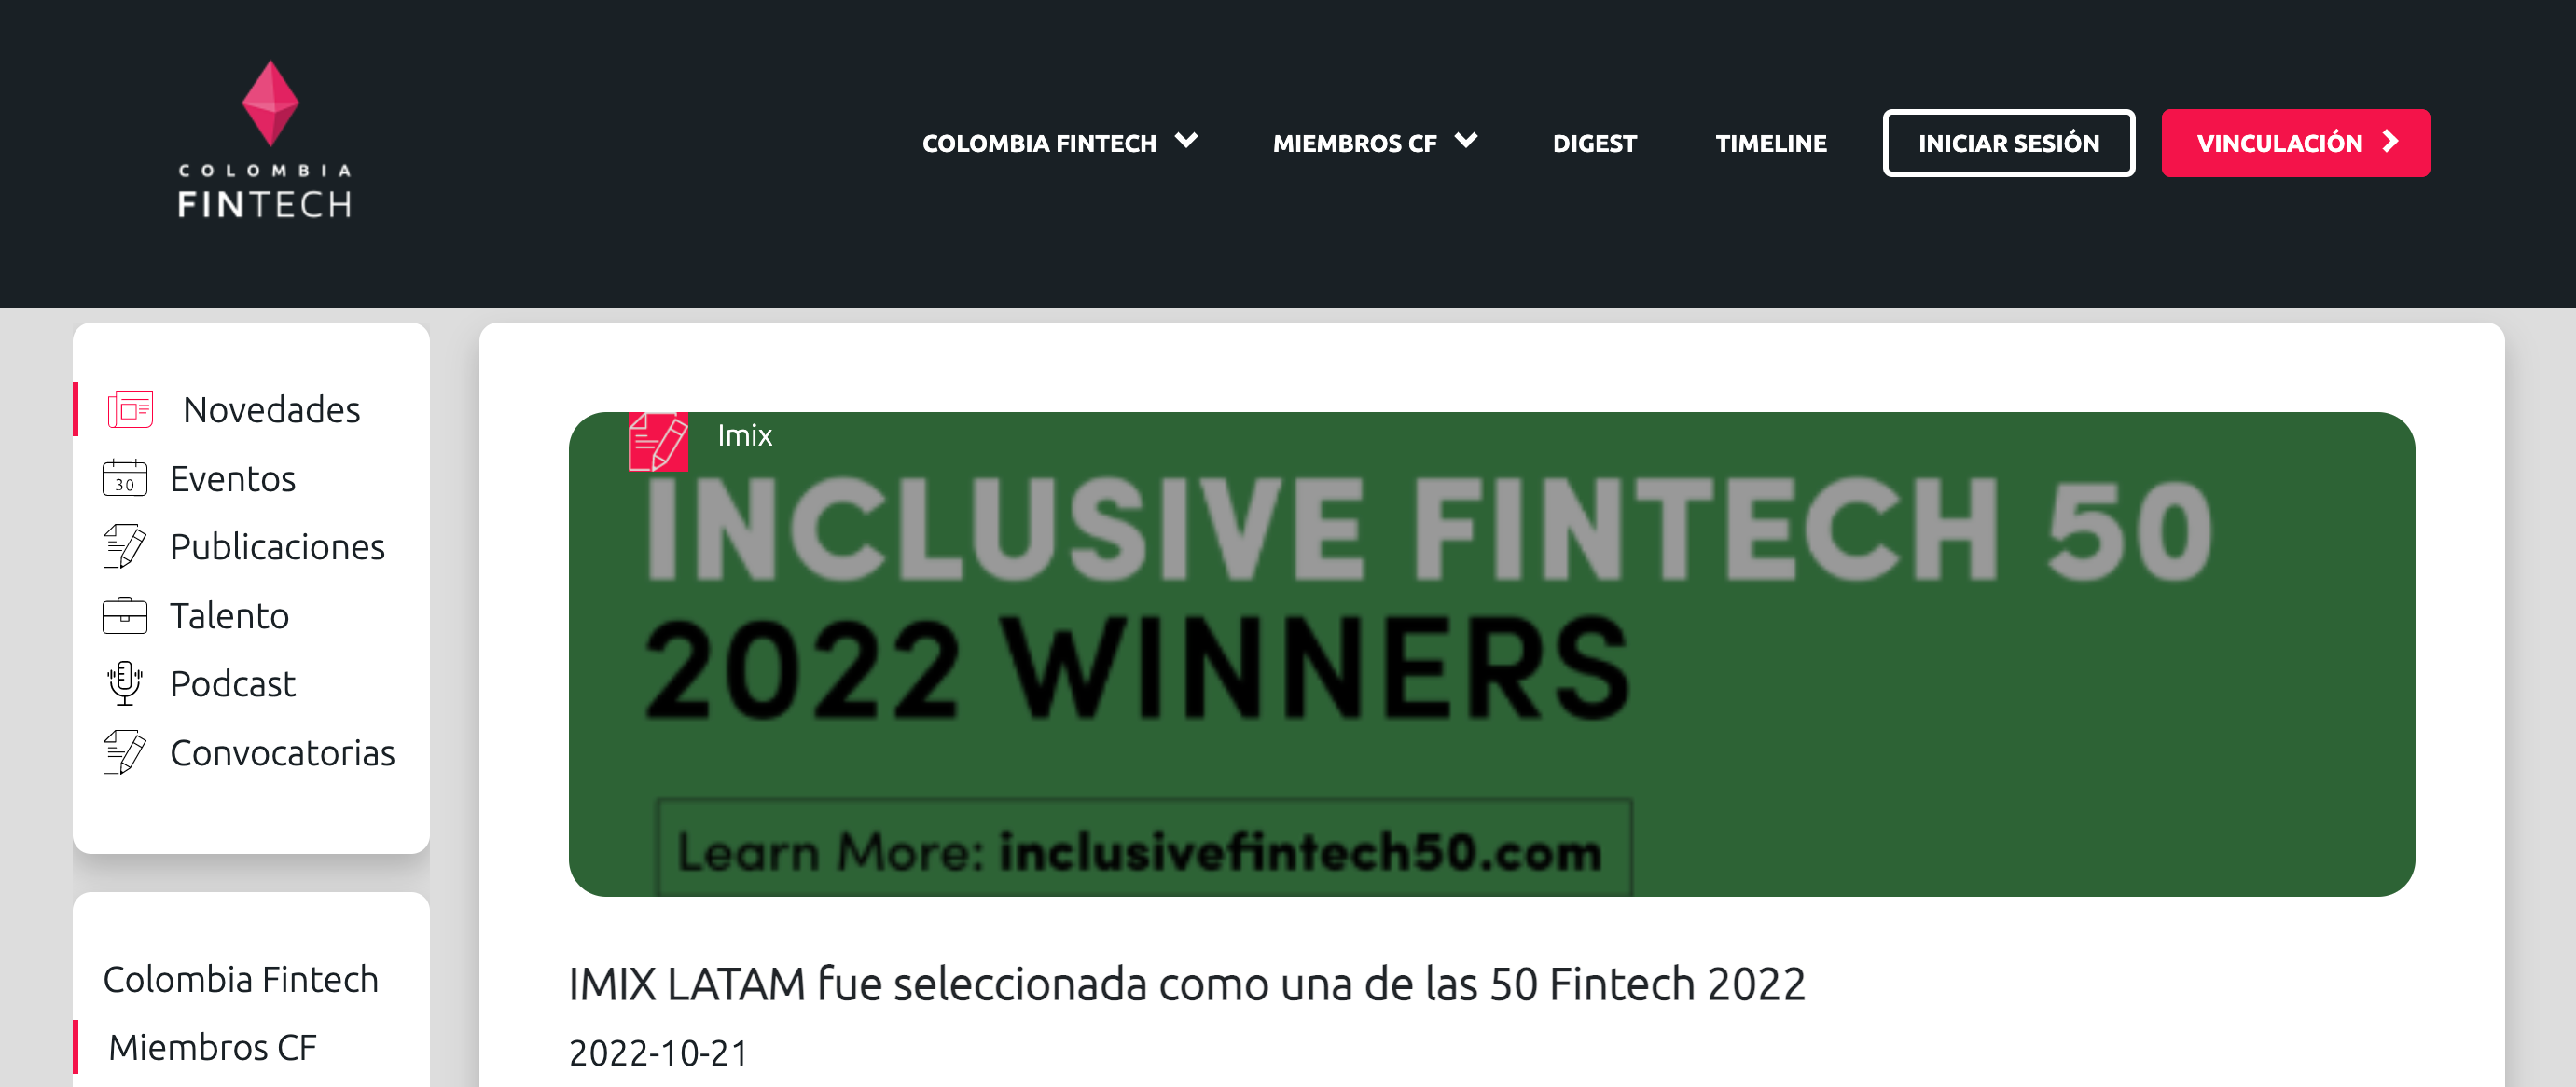 IMIX LATAM, una de las 50 Fintech 2022 seleccionadas por global Inclusive Fintech 